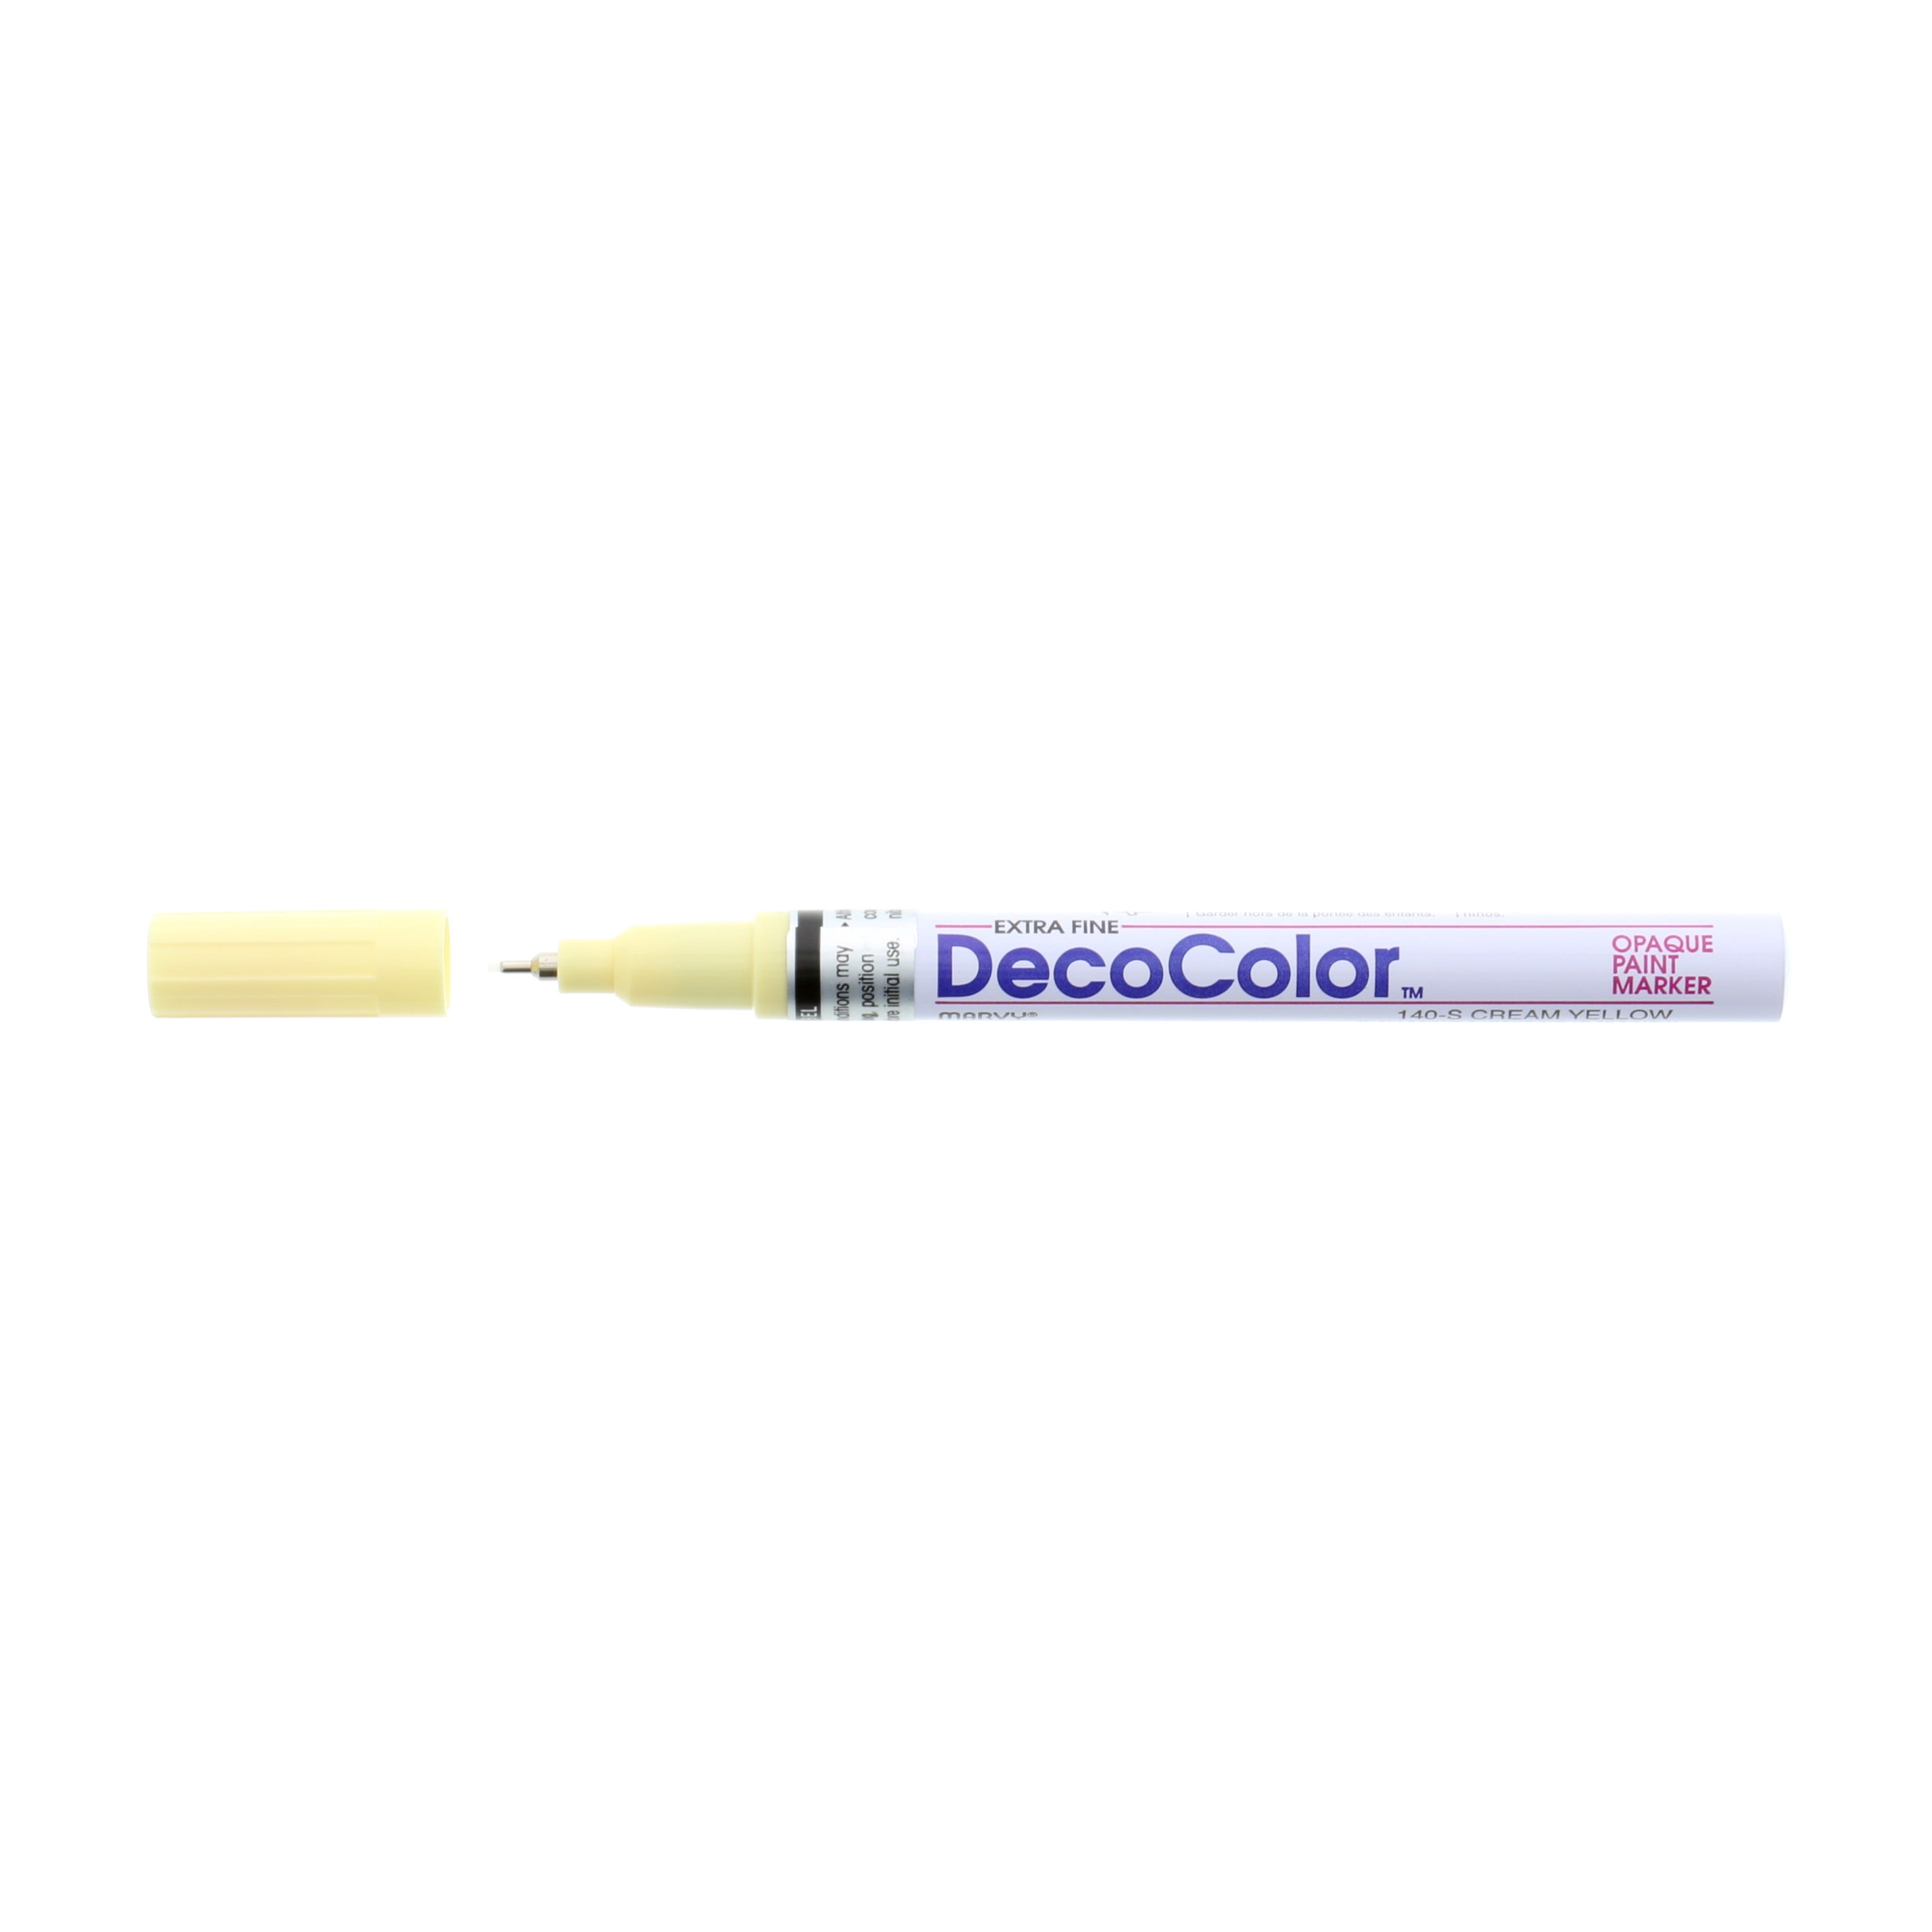 Extra-Fine Cream Yellow DecoColor Paint Marker